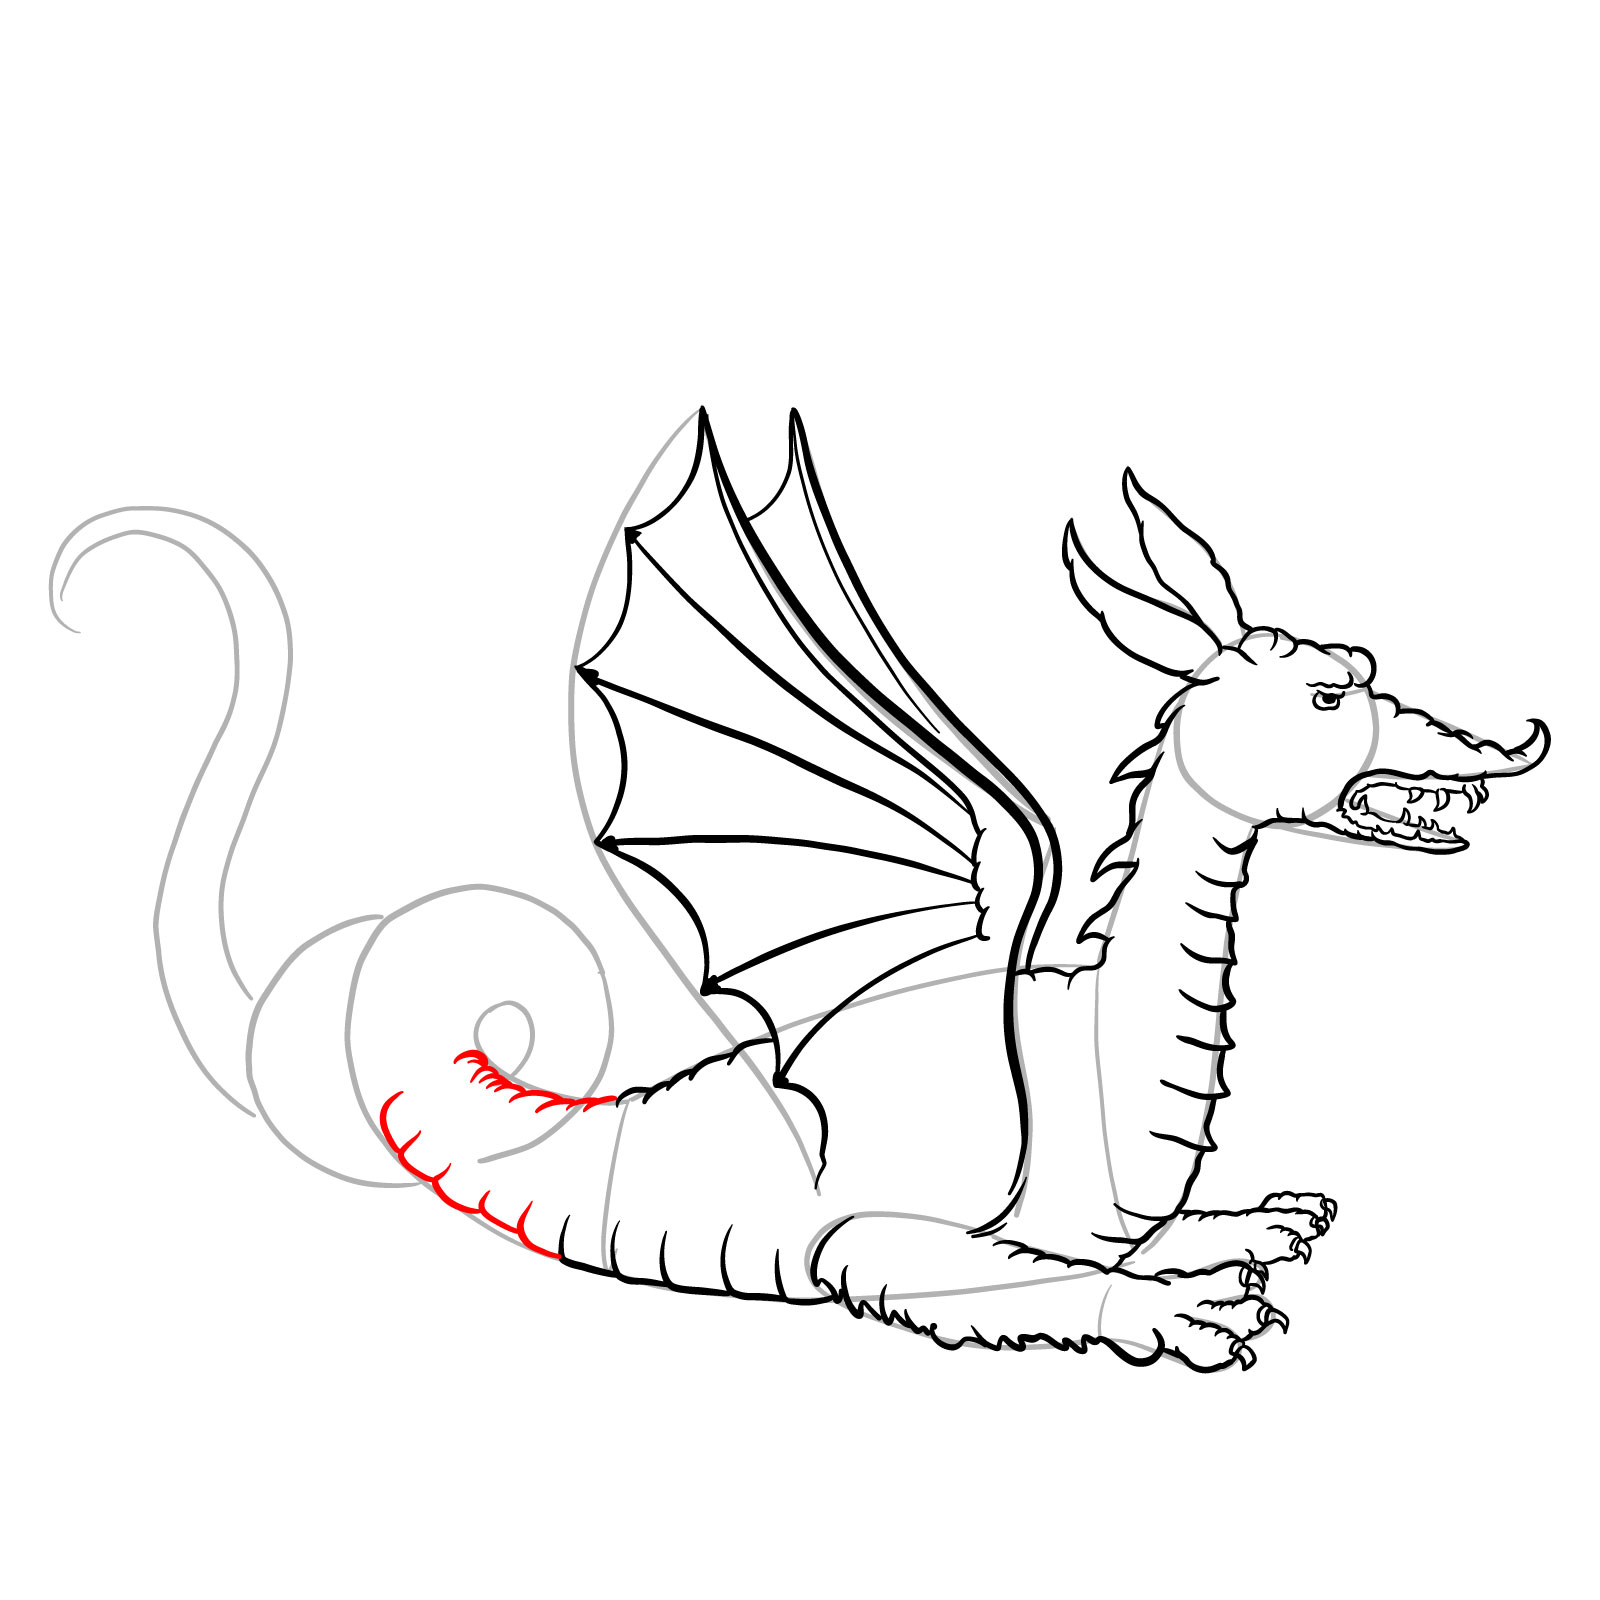 How to draw a Knucker dragon - step 26